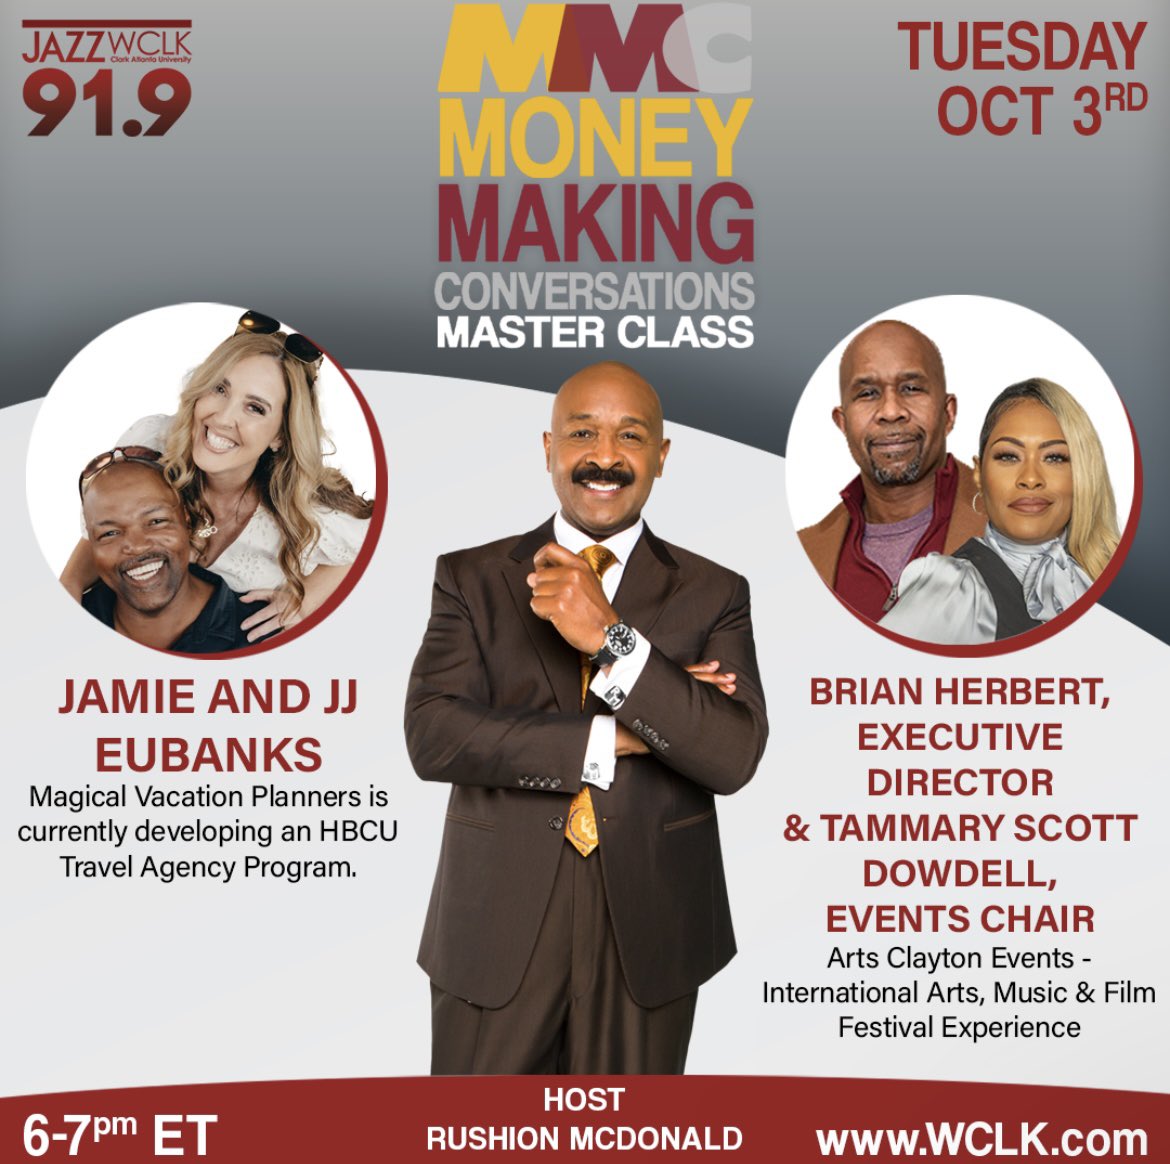 TONIGHT!! @RushionMcDonald and @MoneyMakingConv welcomes #JamieEubanks and #JJEubanks plus #BrianHerbert ad #TammaryScottDowdell 🎧 Listen LIVE at 6pm.